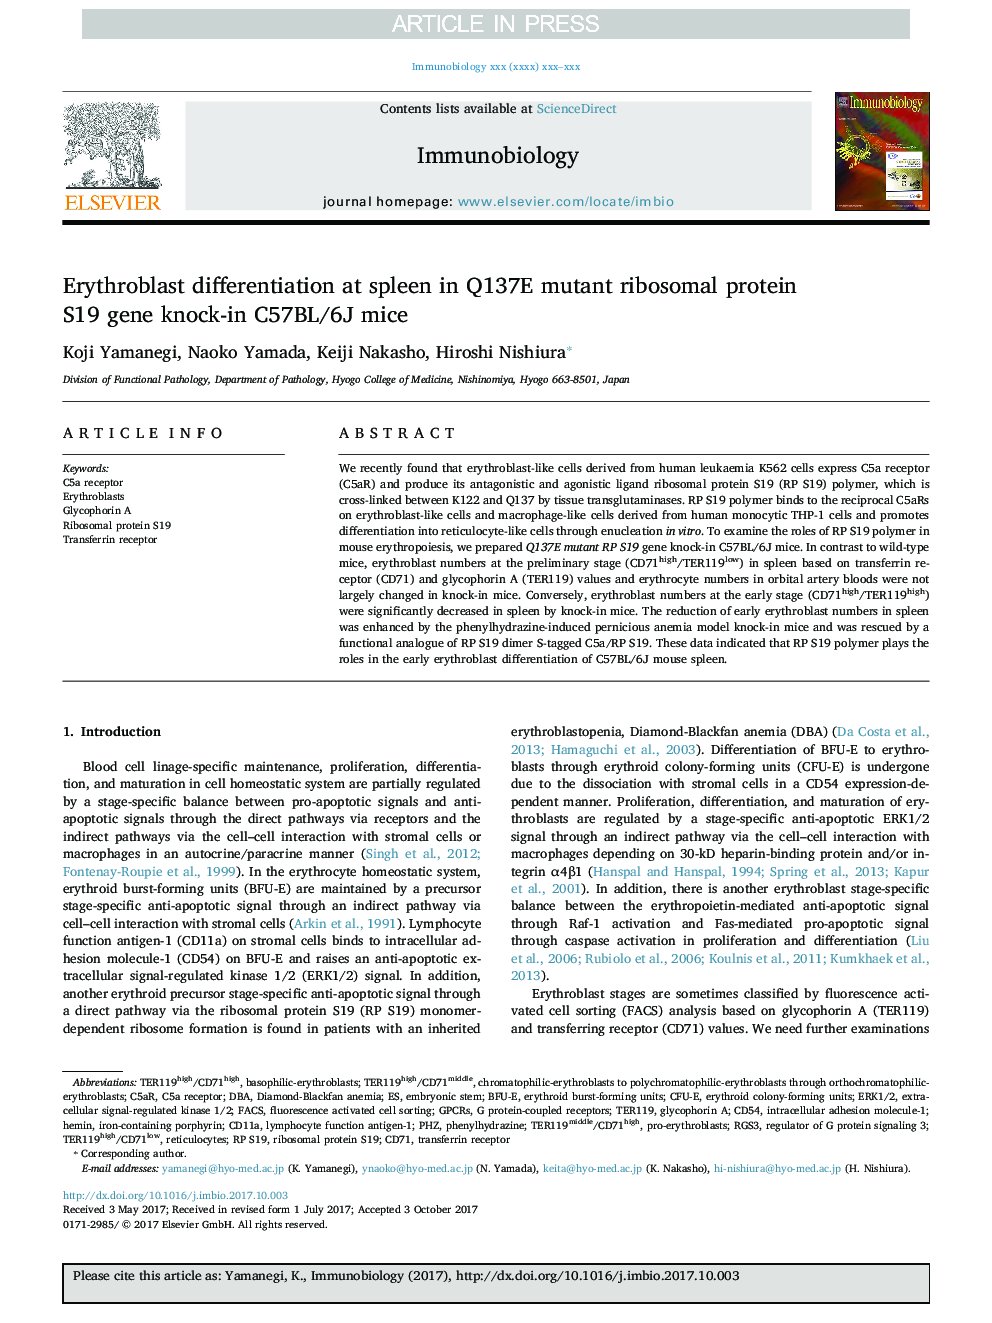 Erythroblast differentiation at spleen in Q137E mutant ribosomal protein S19 gene knock-in C57BL/6J mice